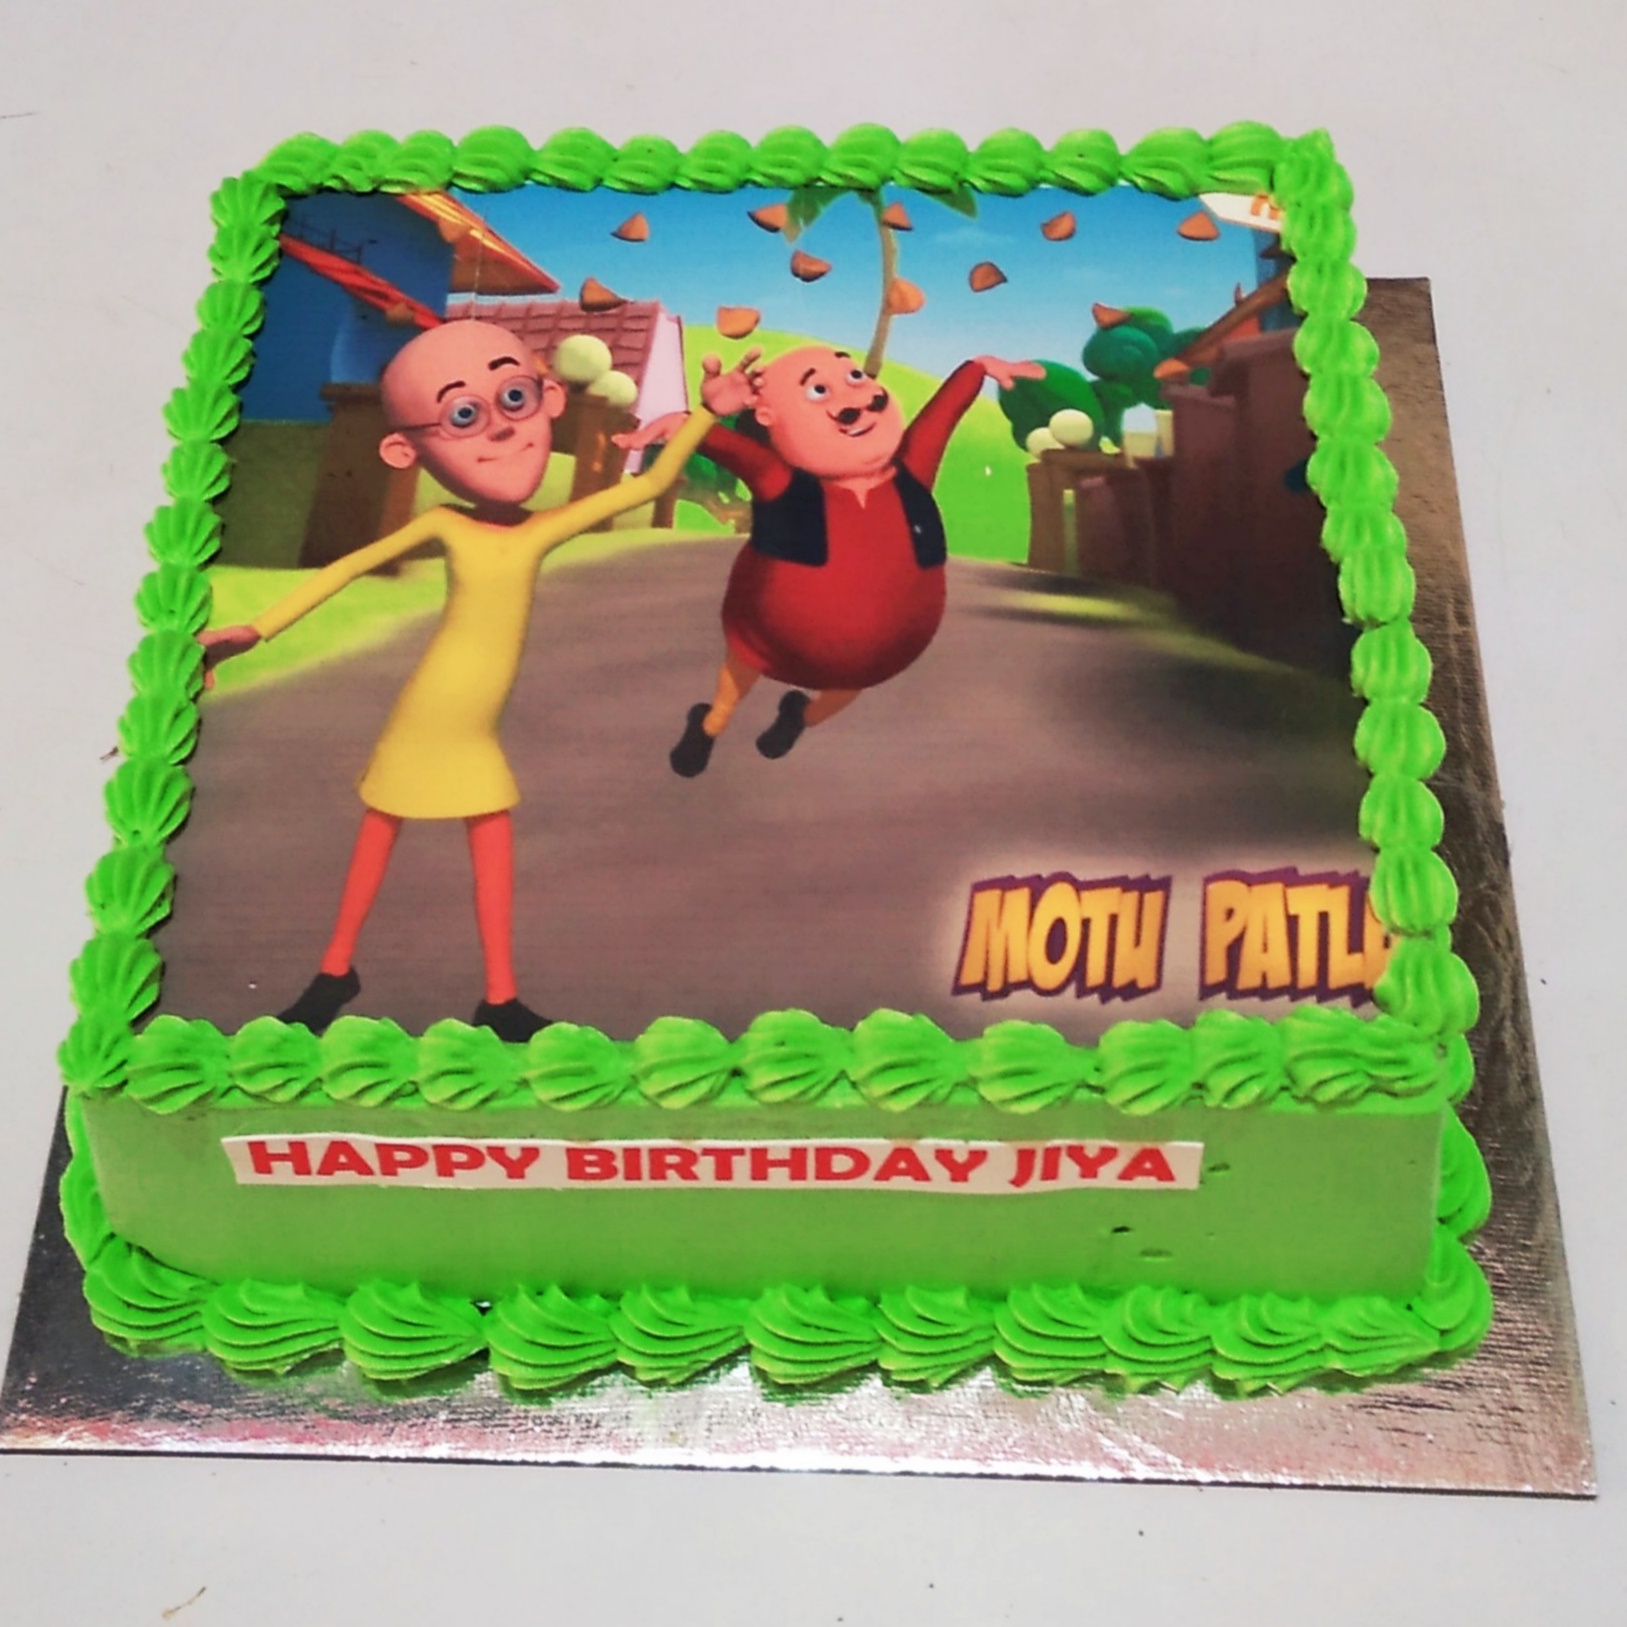 Motu Patlu Cream Photo Cake Delivery in Delhi NCR - ₹1, Cake Express